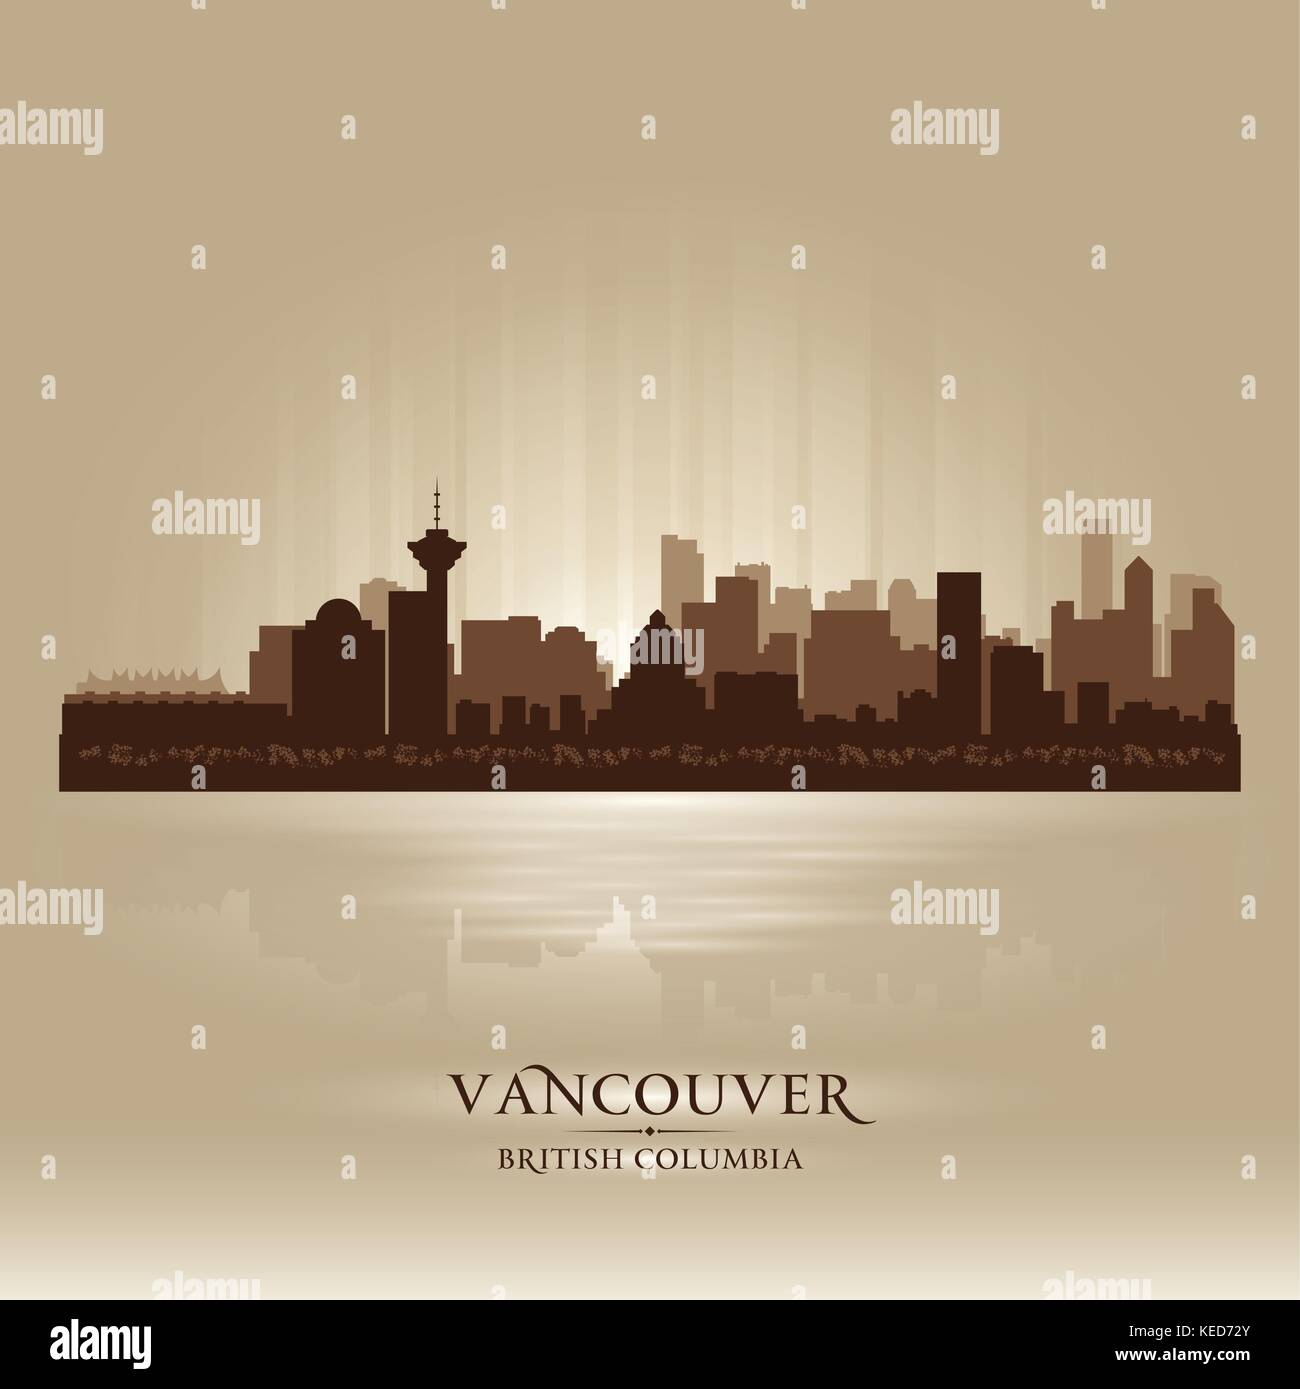 Vancouver British Columbia skyline city silhouette. Vector illustration Stock Vector